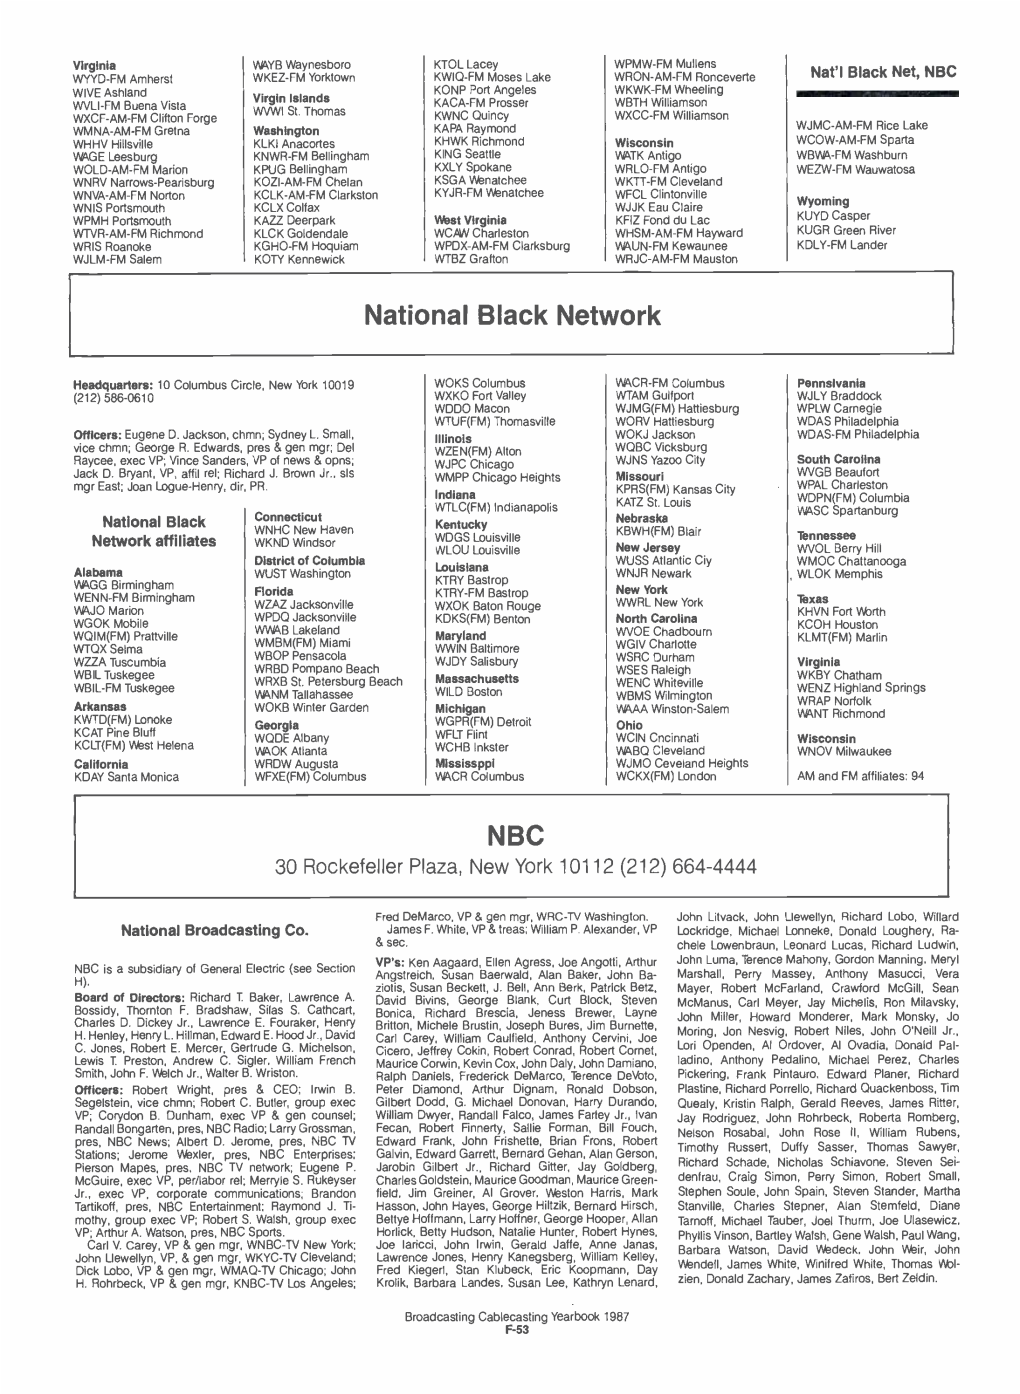 National Black Network